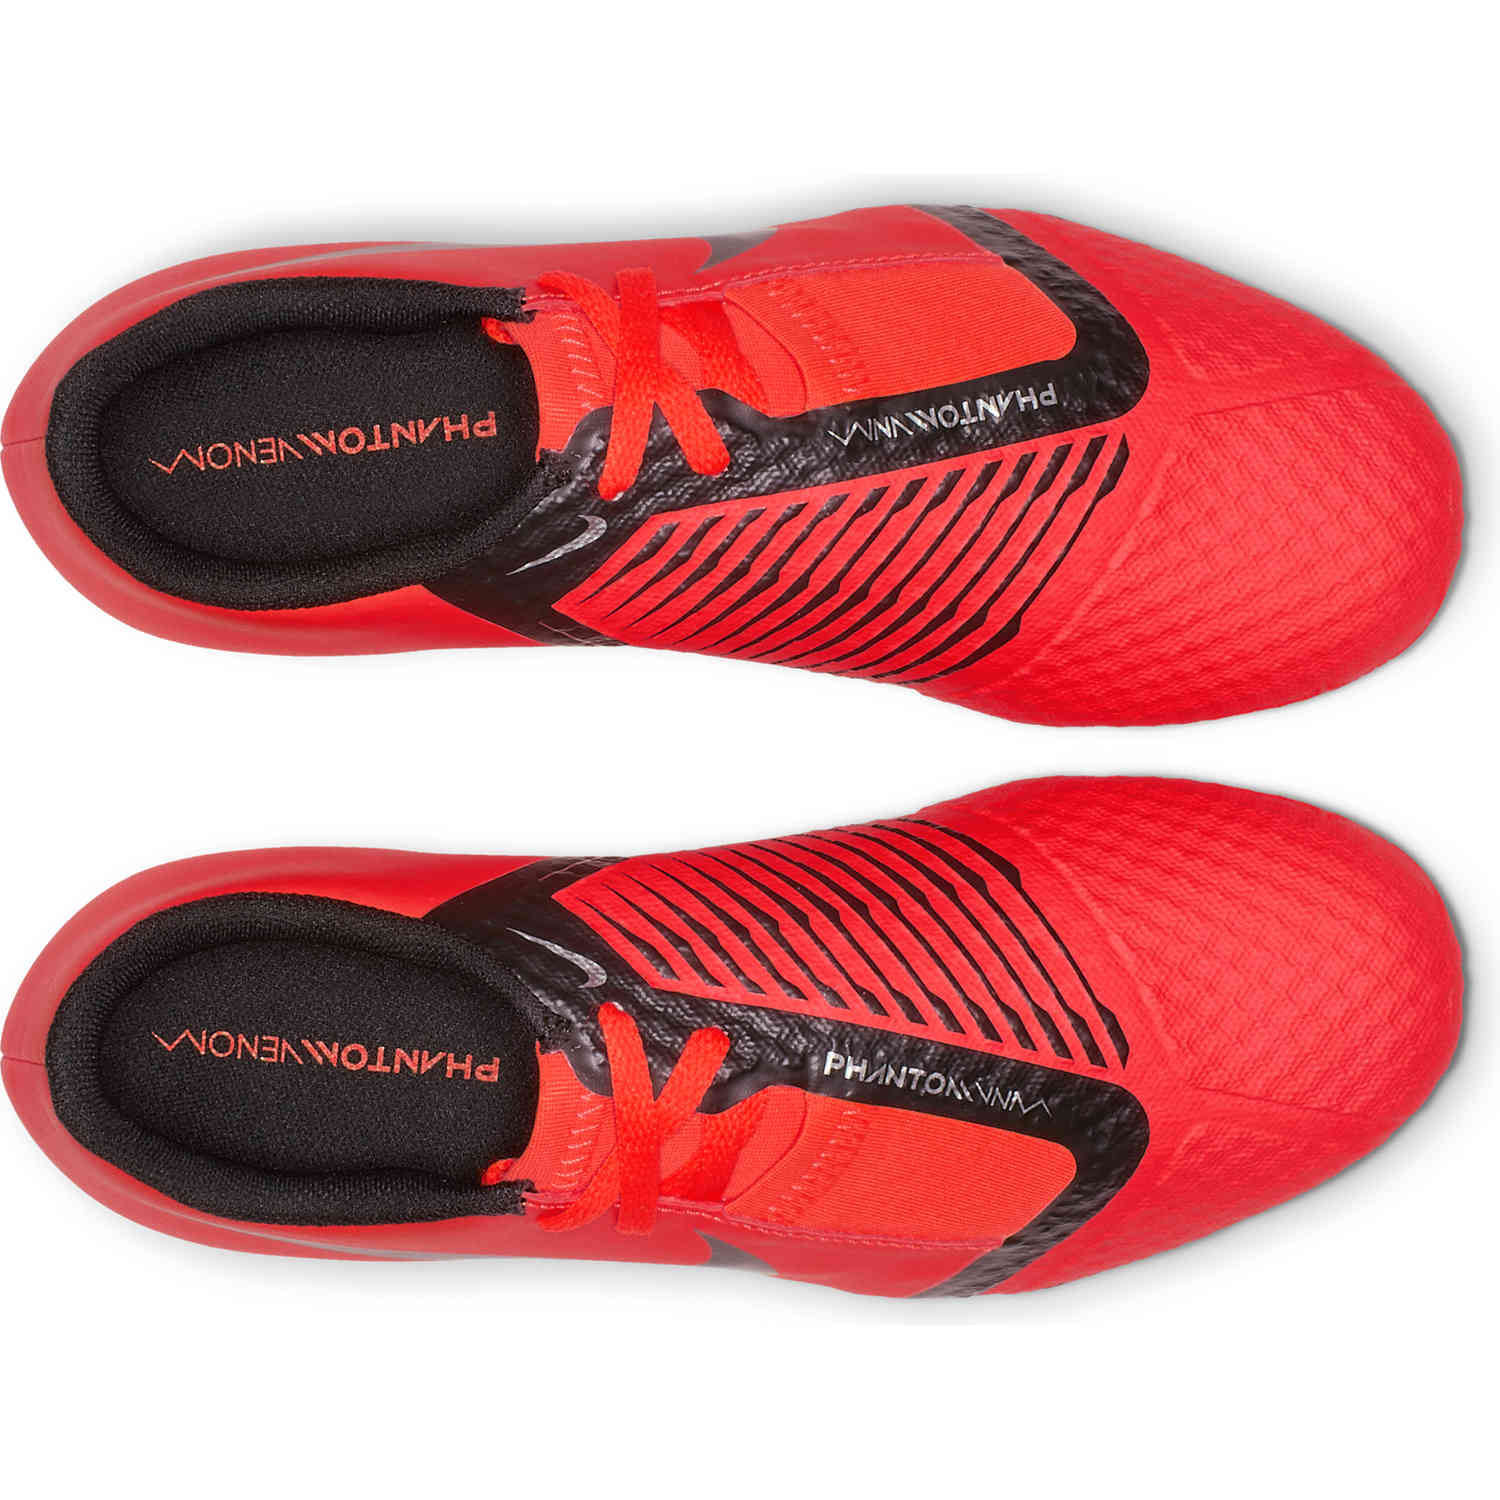 Nike Soccer Cleats Nike Hypervenom Phantom 3 Pro DF FG